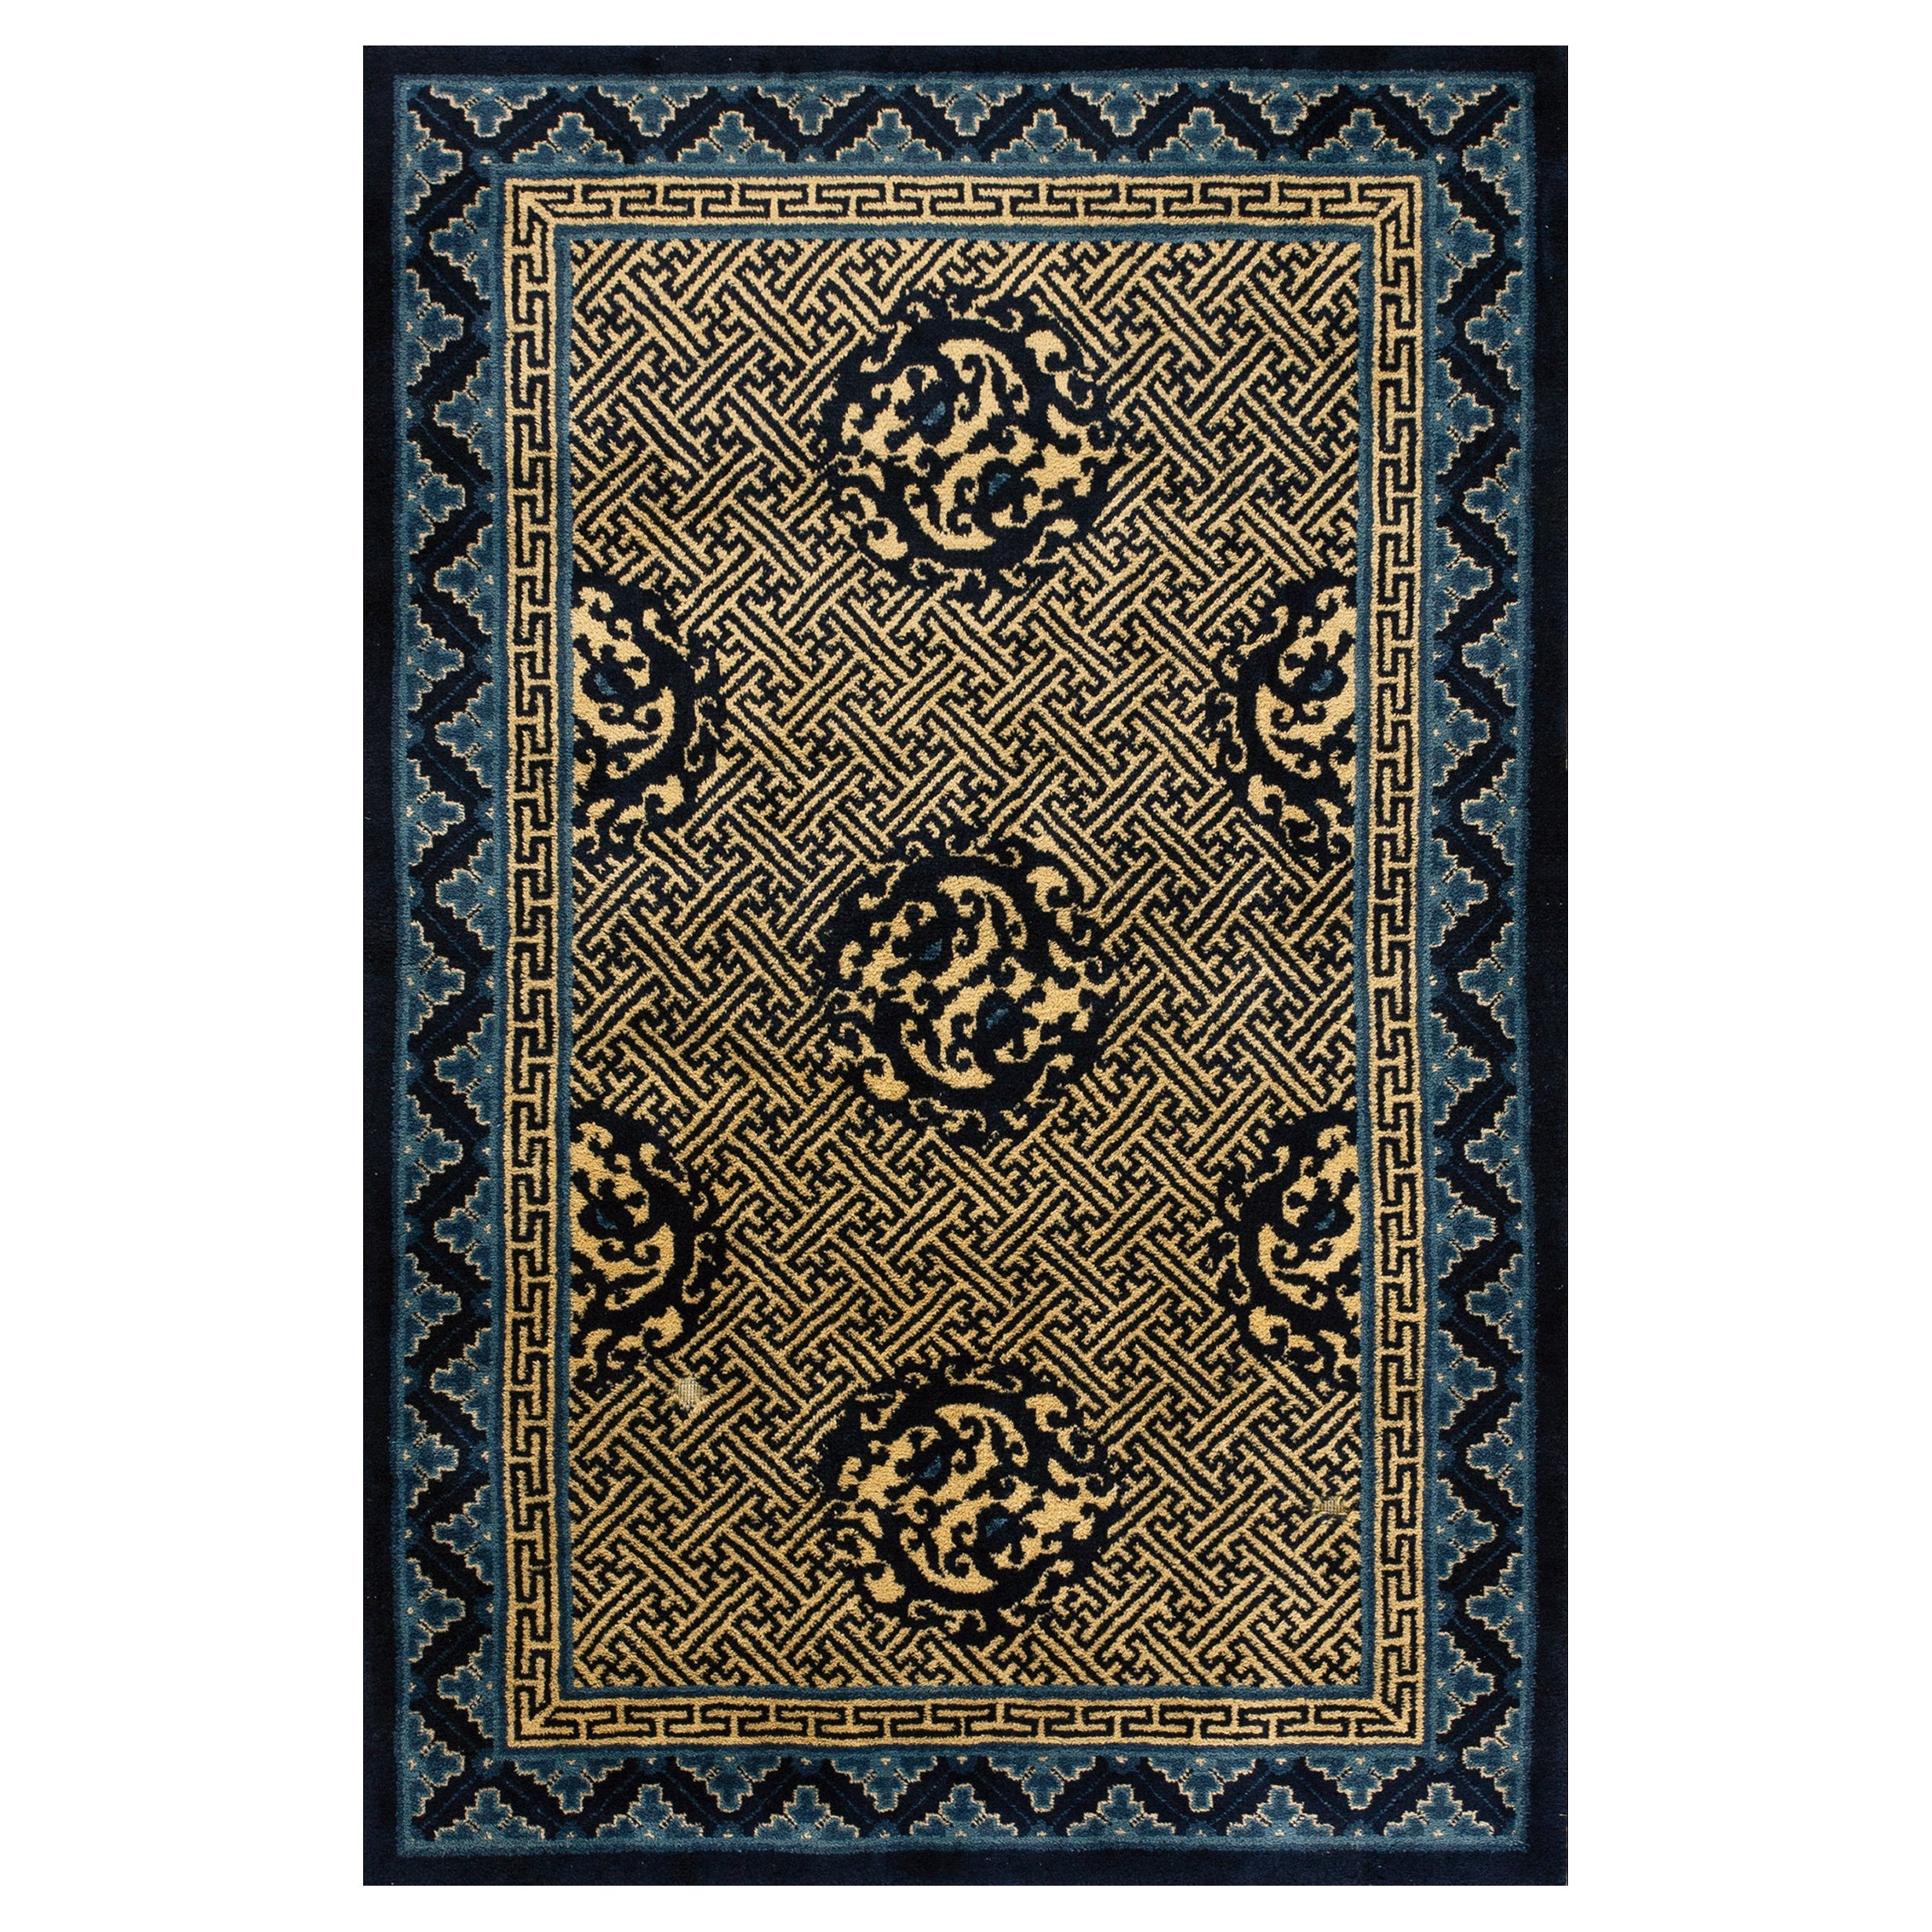 Early 20th Century Chinese Peking Dragon Carpet ( 4'2" x 6'3" - 127 x 191 )